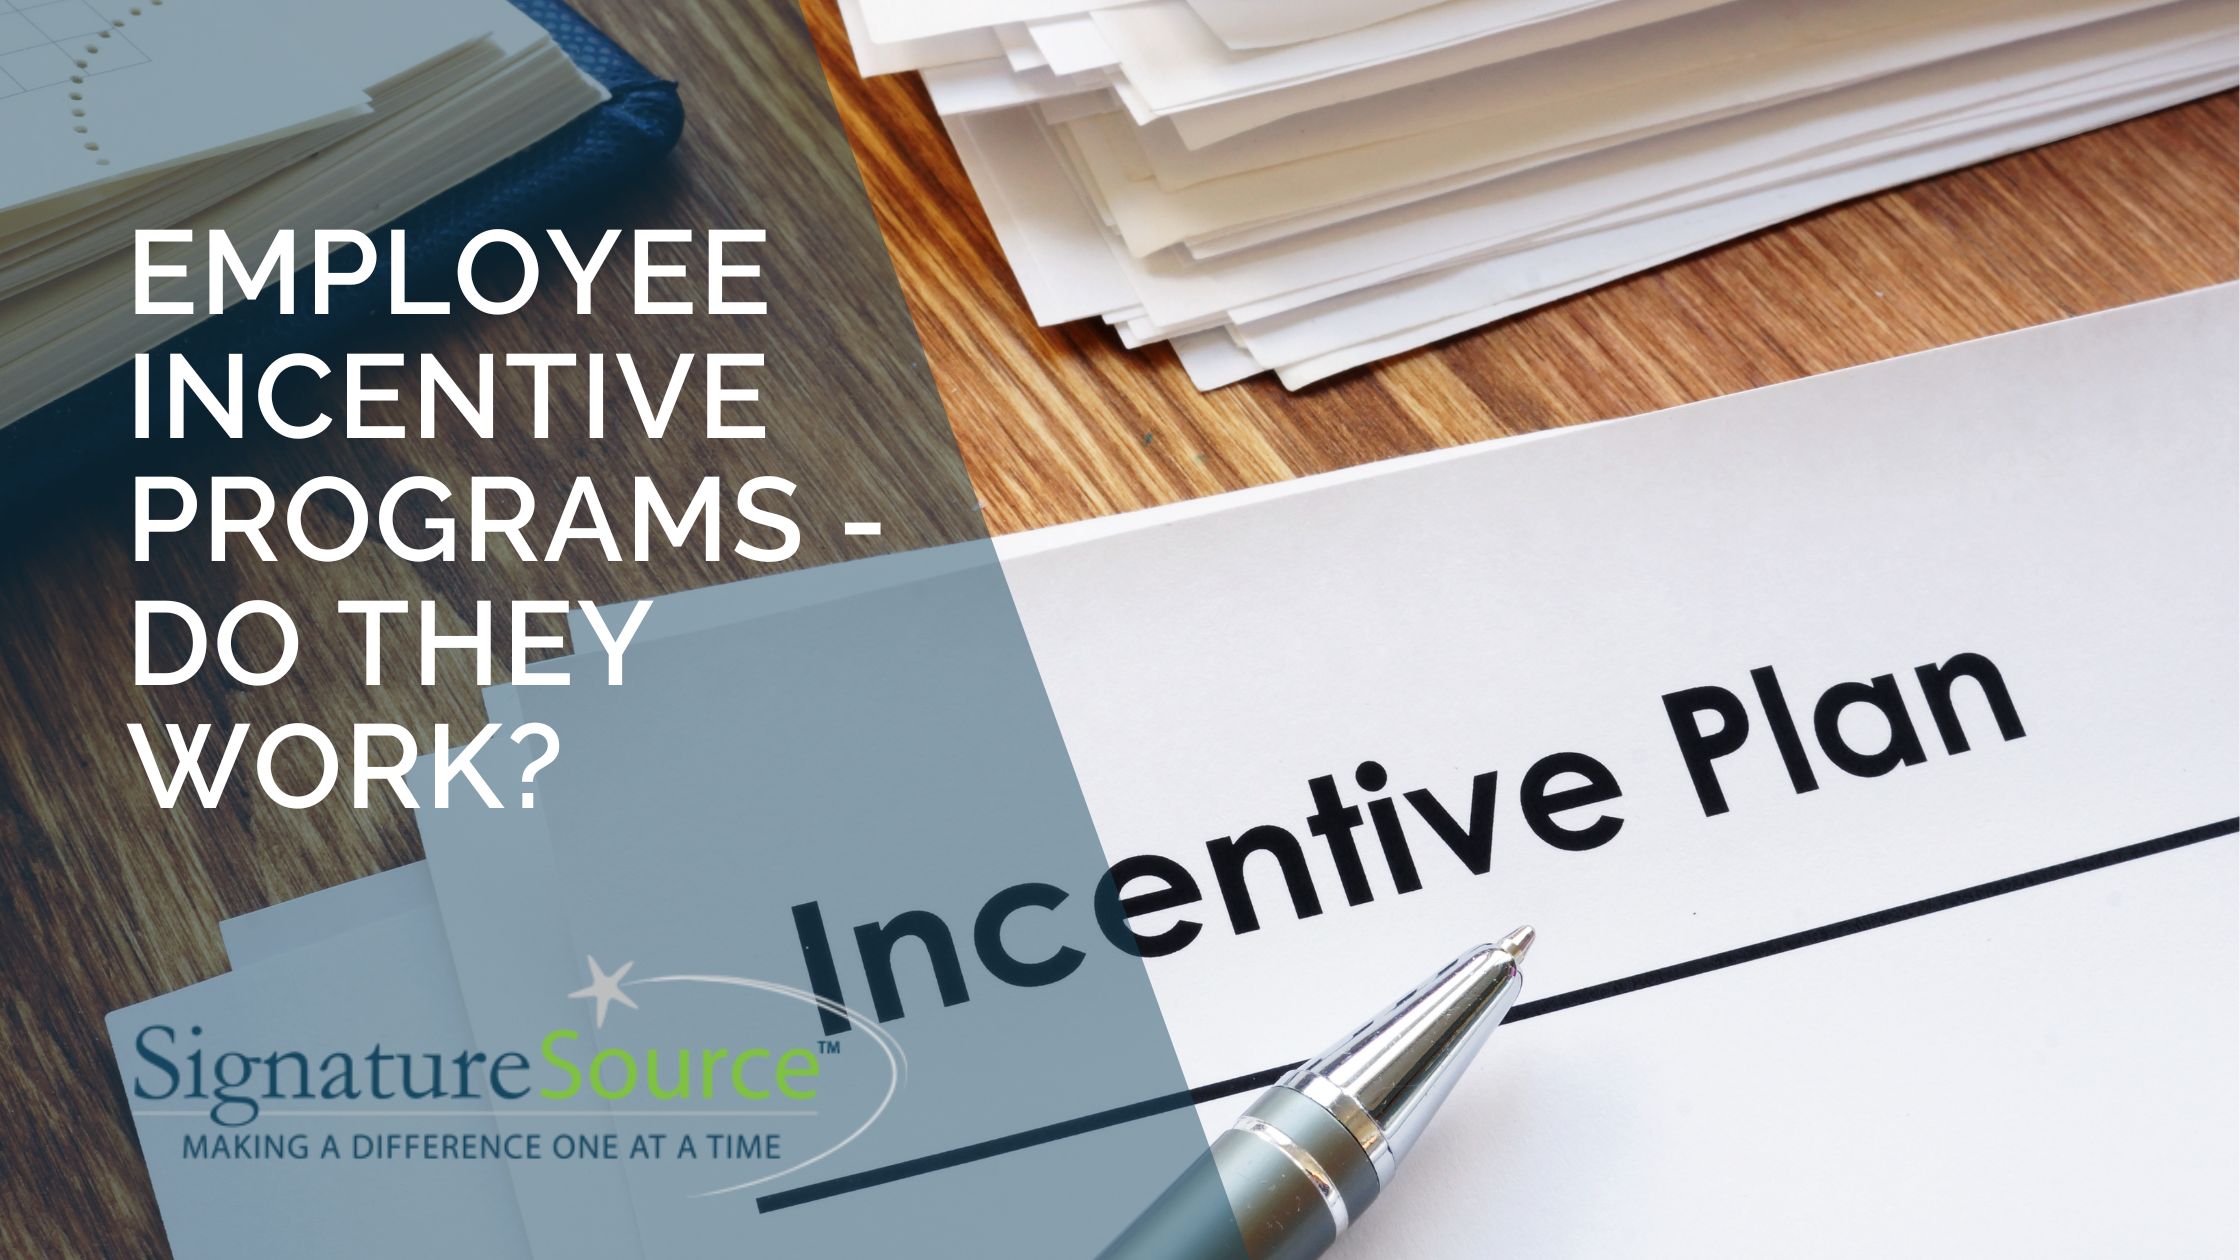 Employee incentive programs